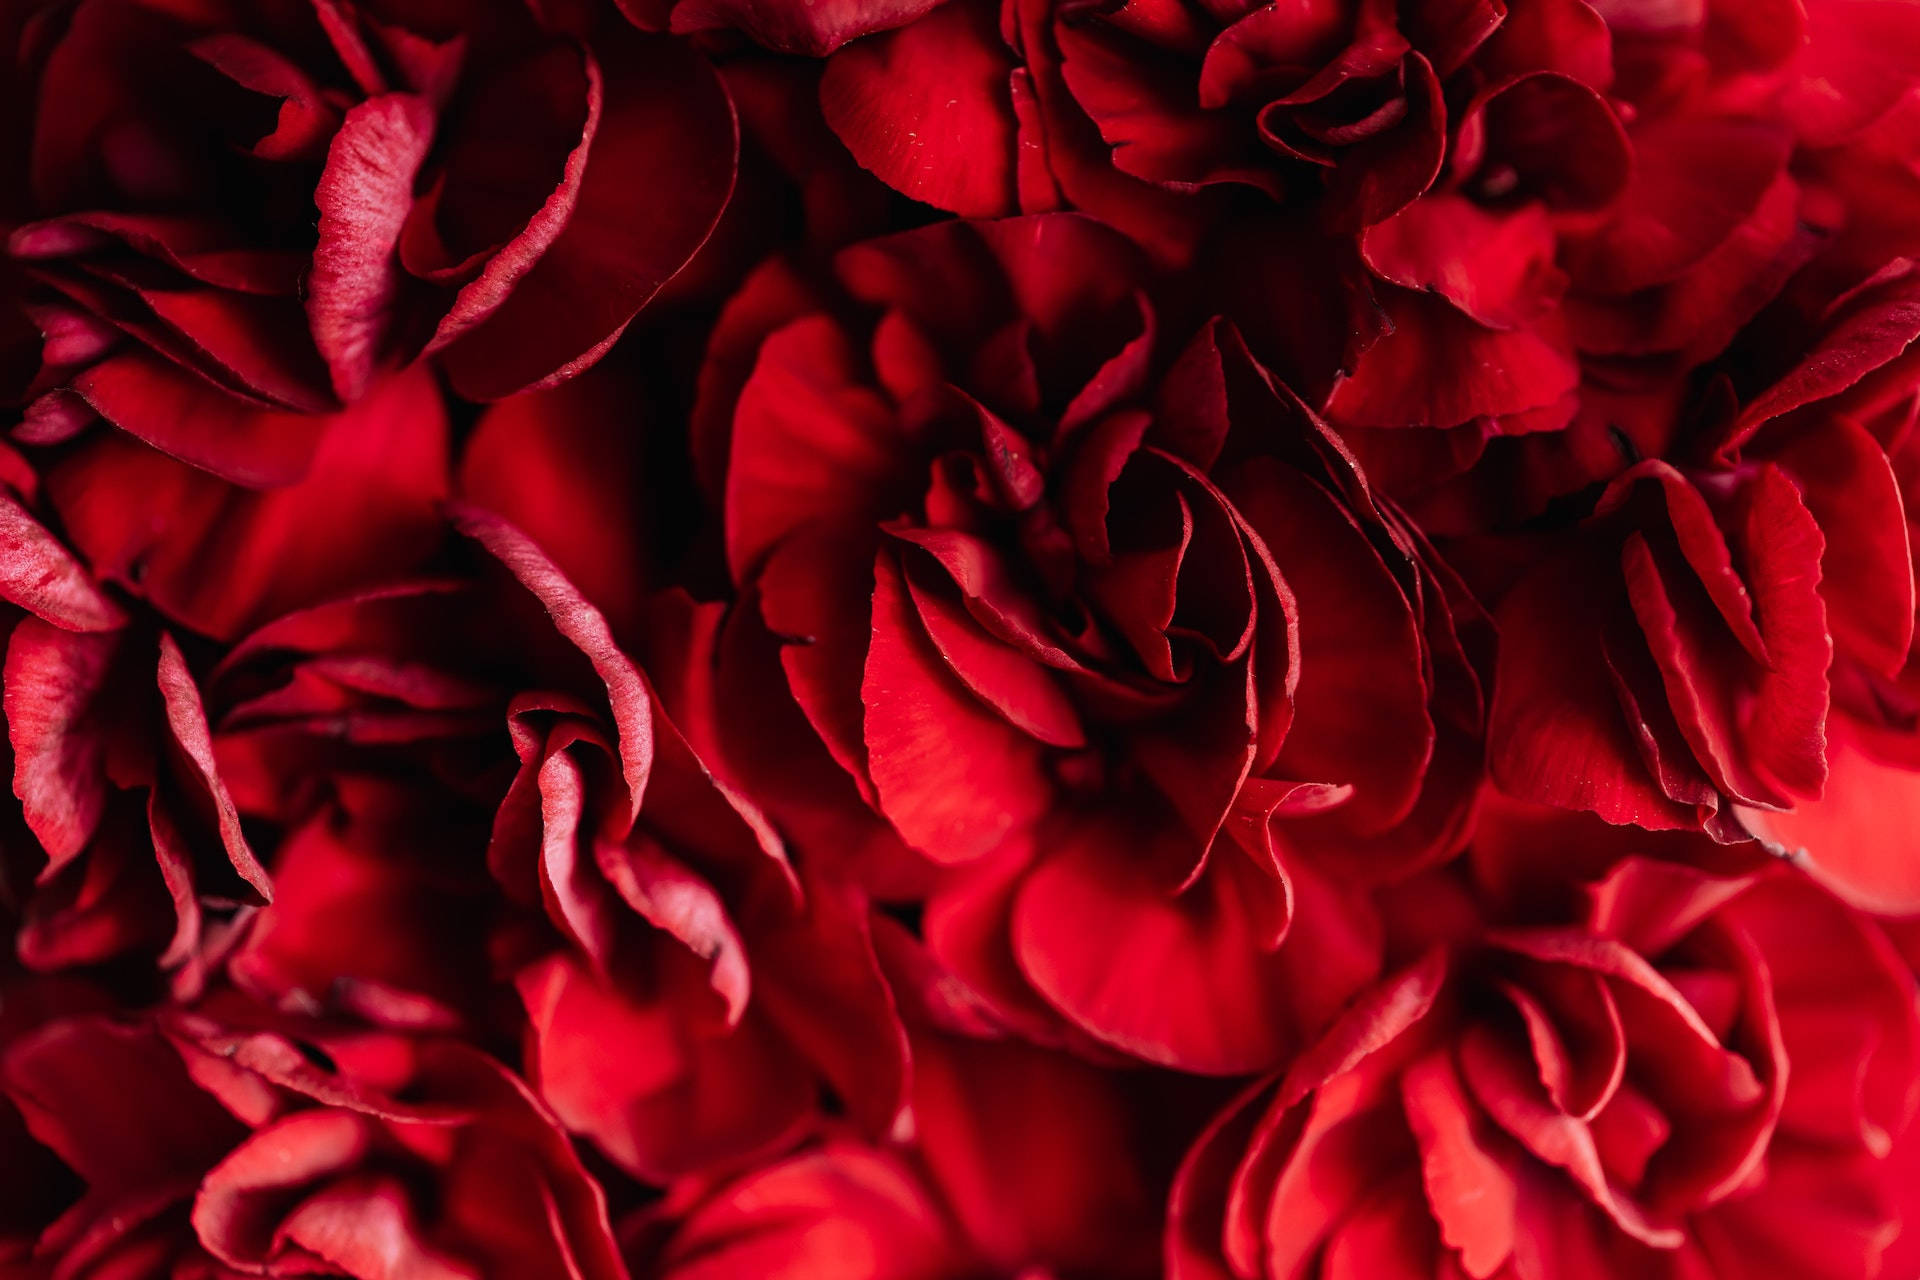 Red Roses Scarlet Petals